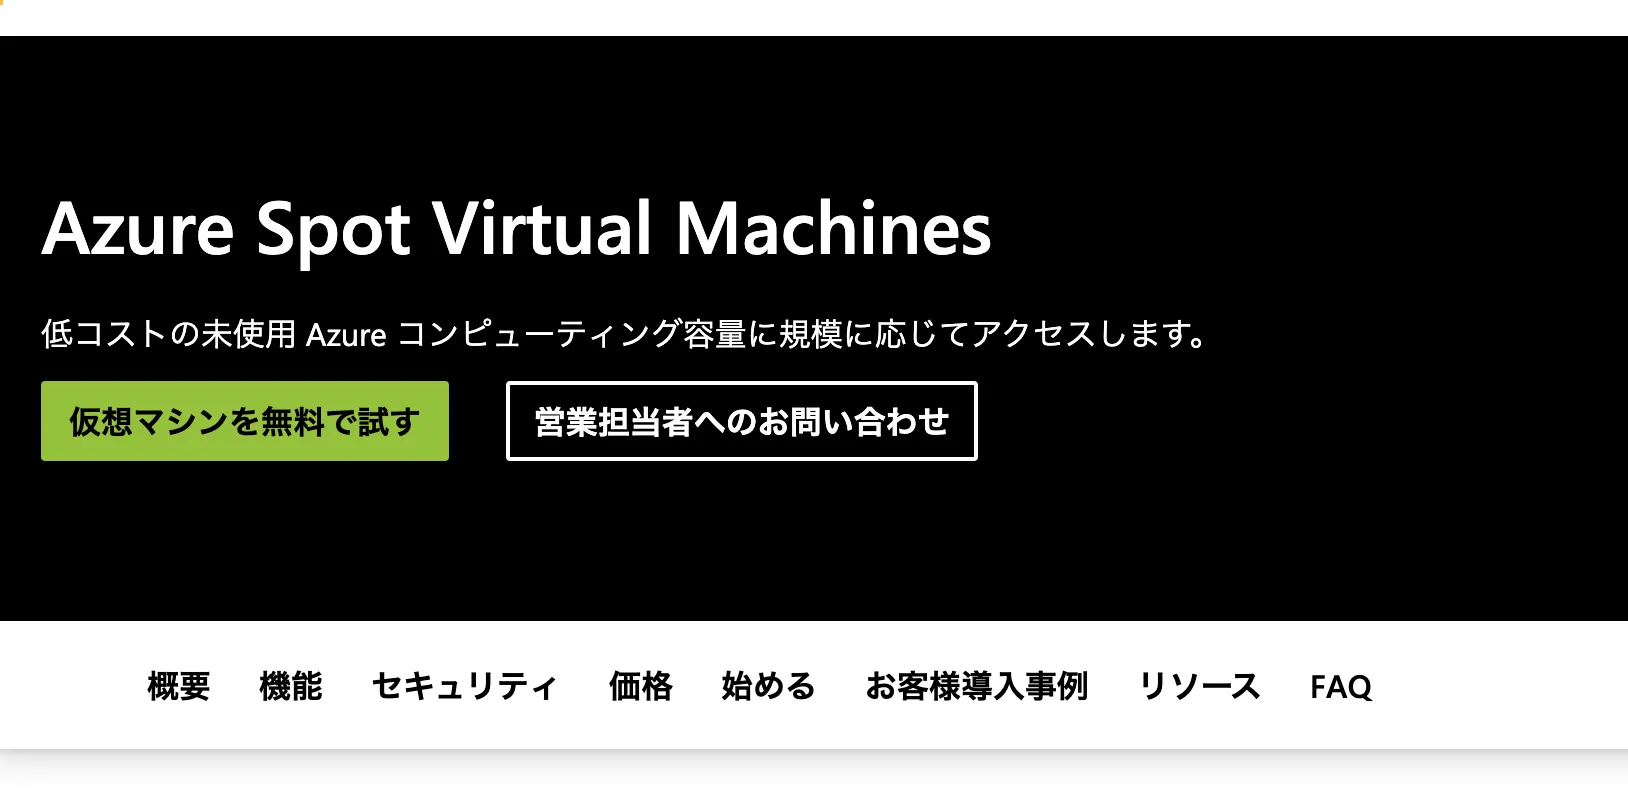 Azure Spot Virtual Machines